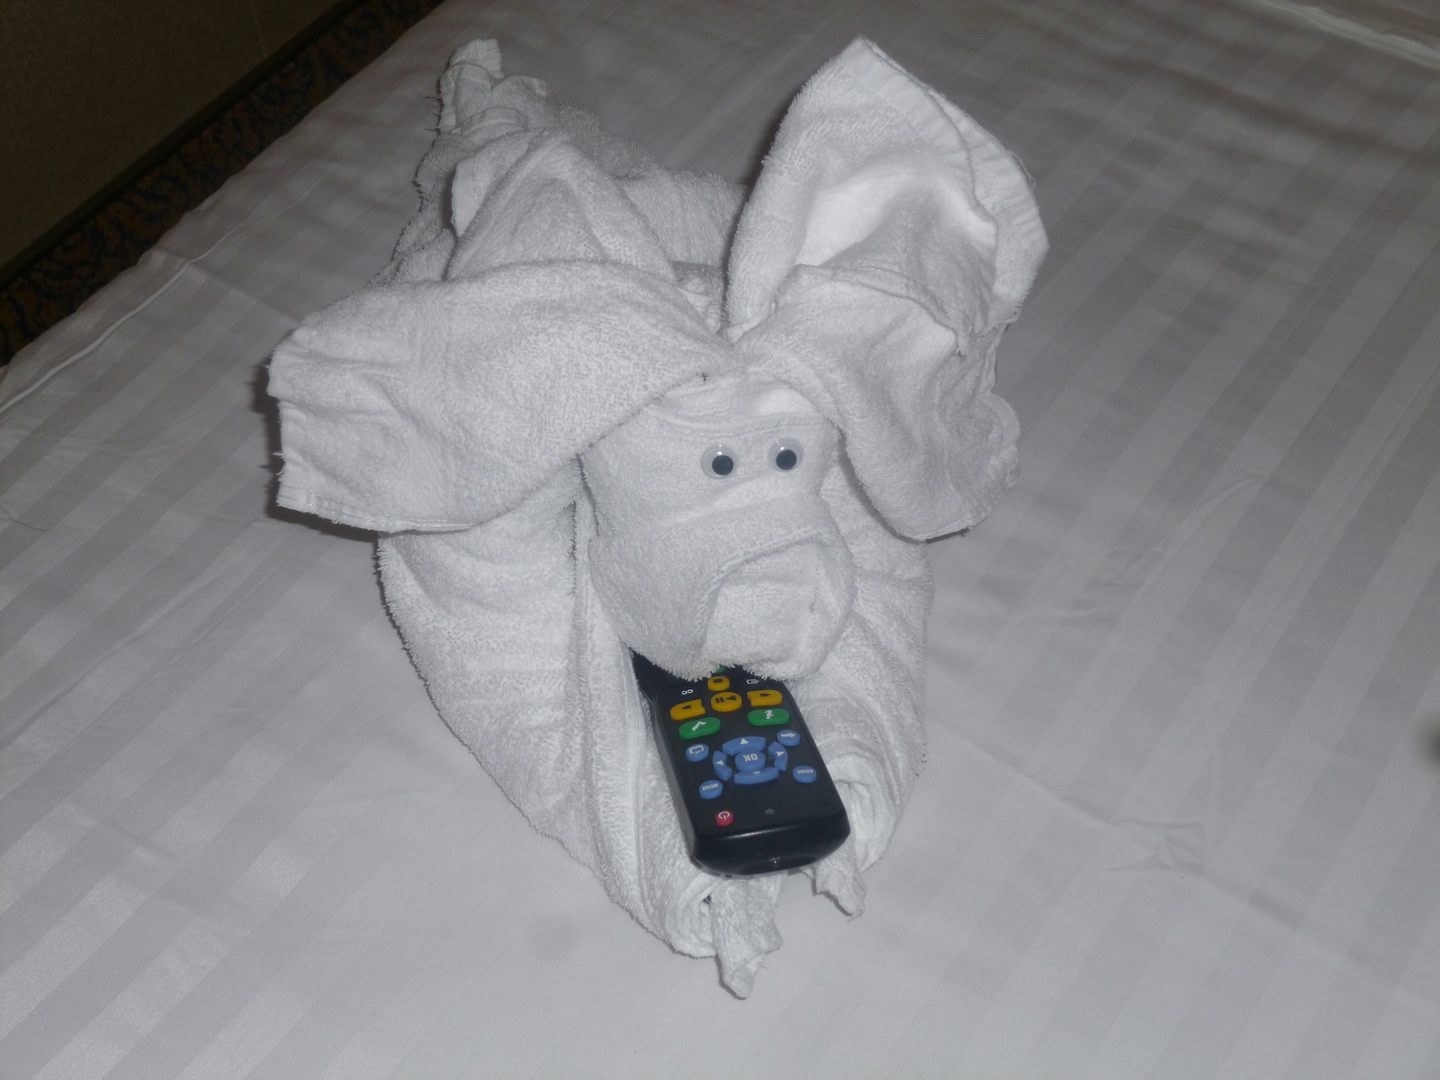 A Towel animal